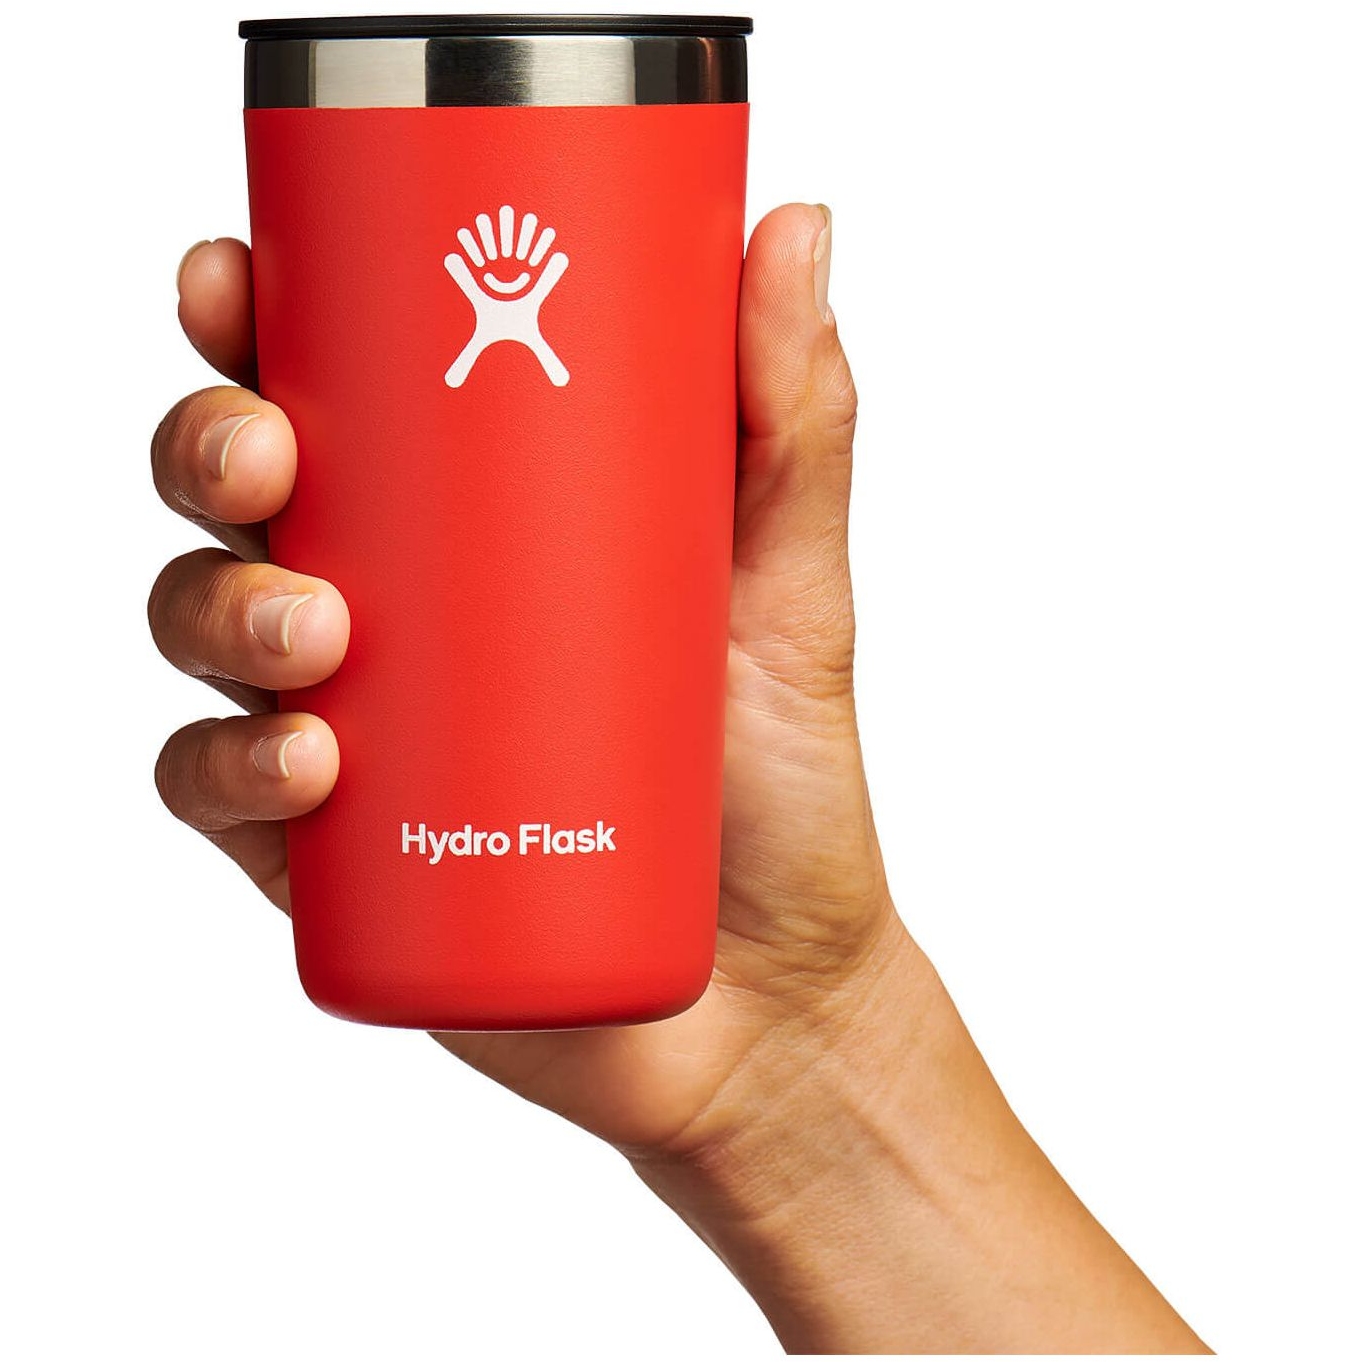 Hydro Flask 12 oz All Around Tumbler - 354ml - Goji